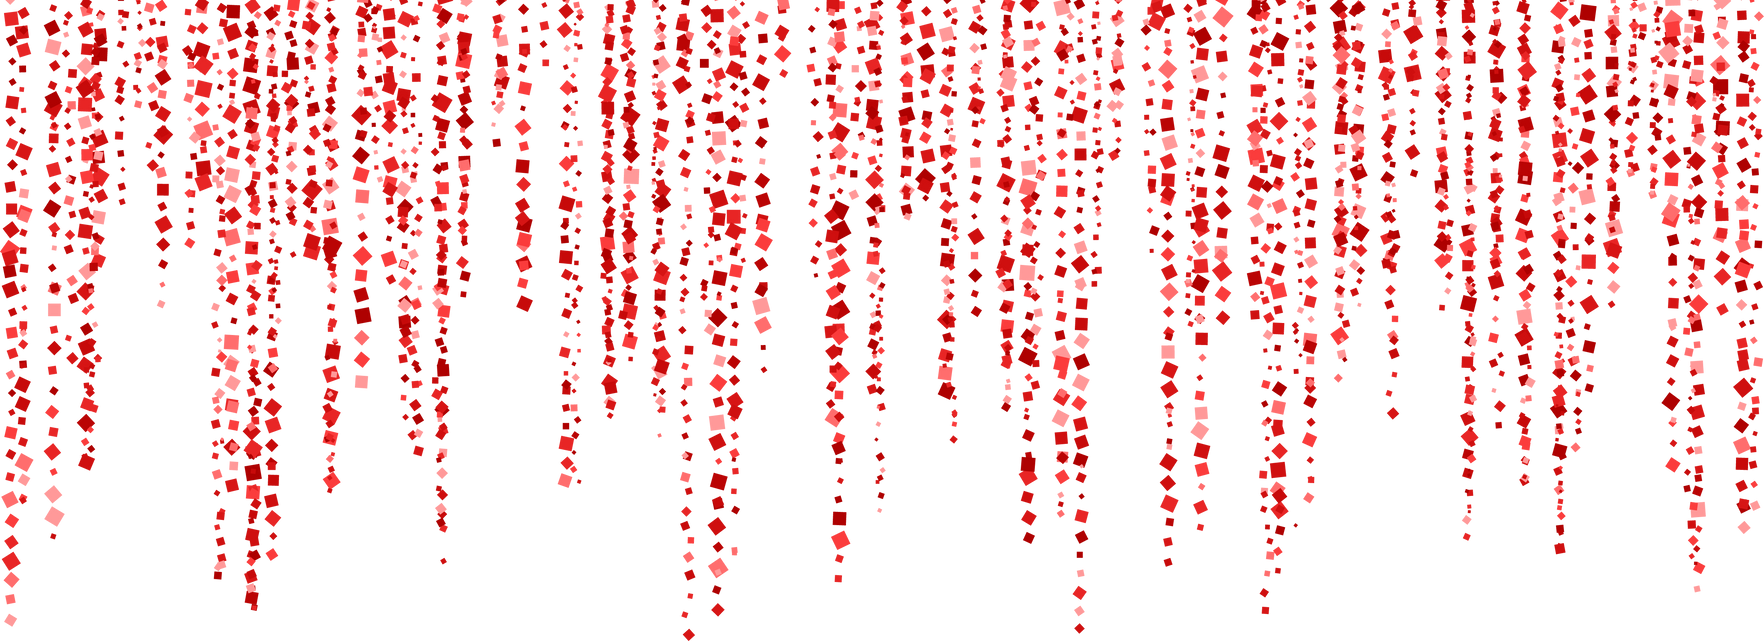 Red glitter rain garland decoration